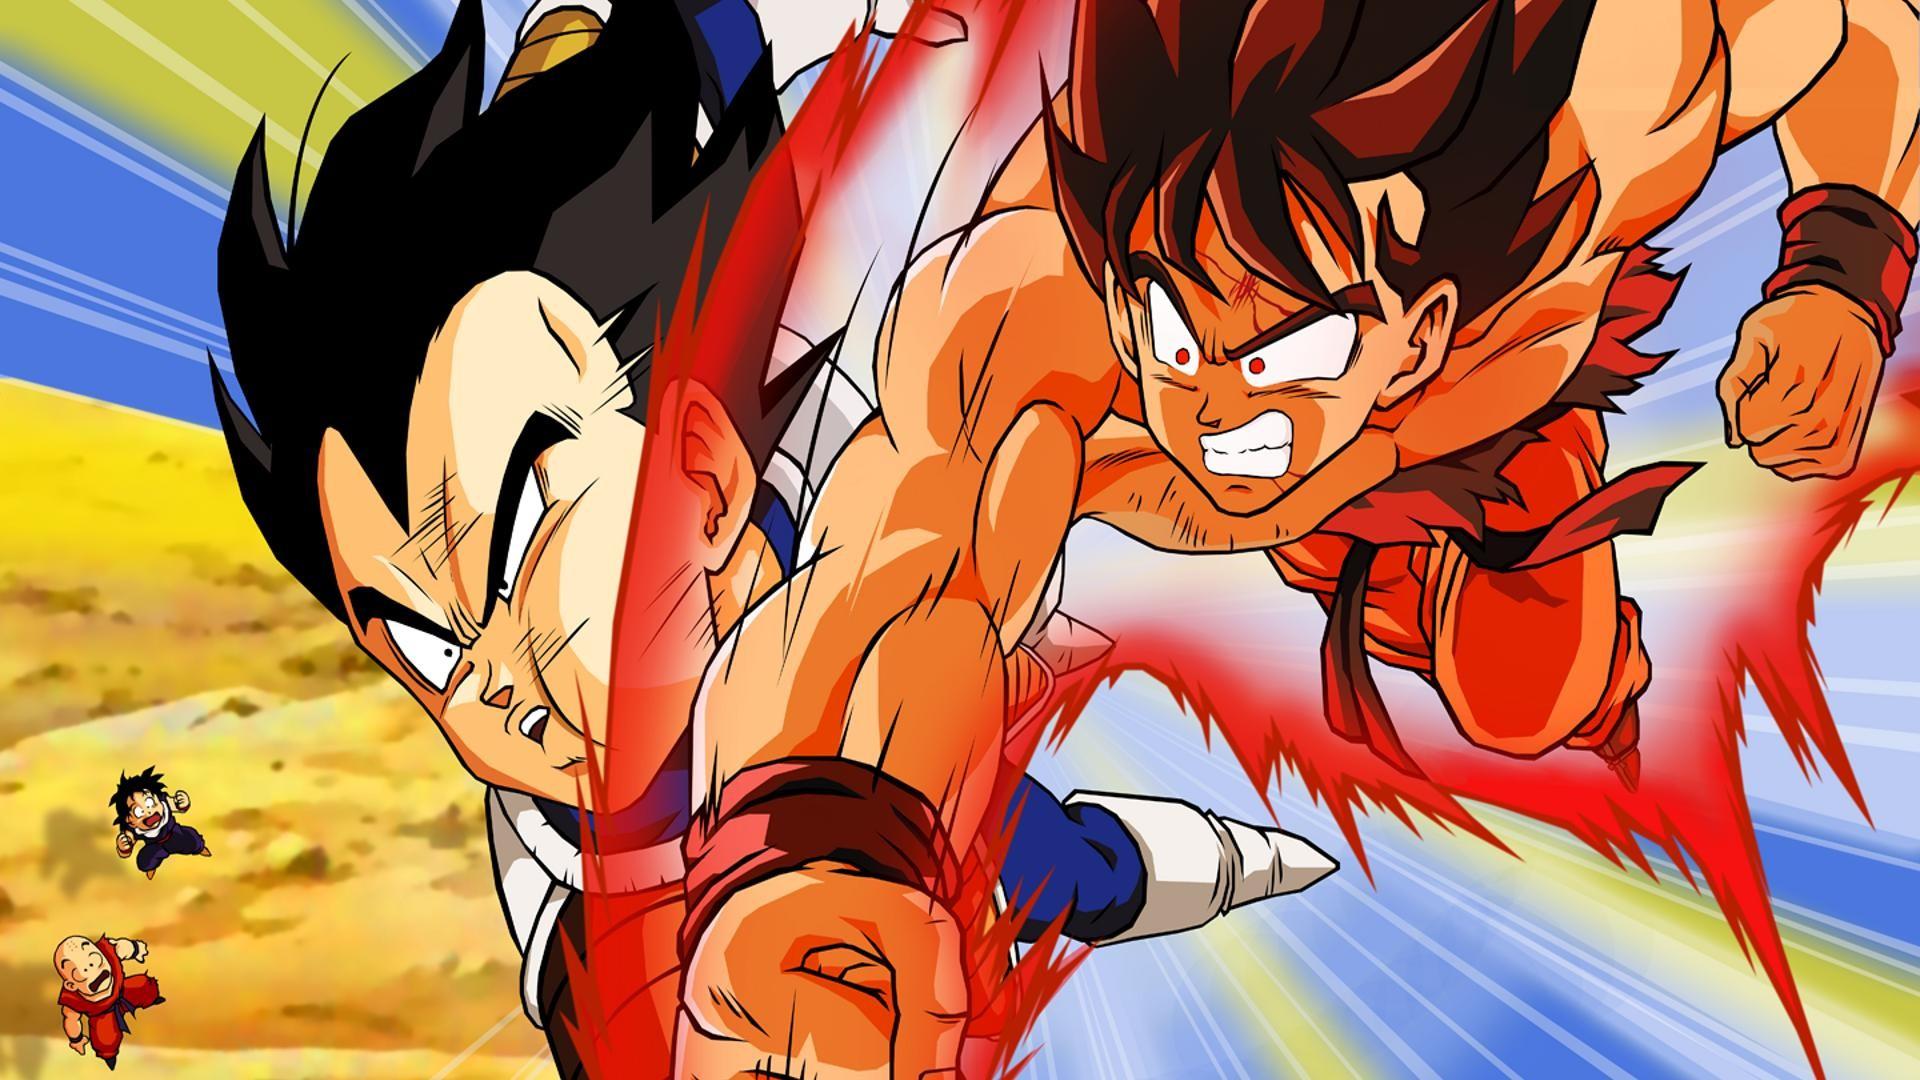 Goku VS Vegeta Fighting Wallpaper, Goku VS Vegeta Fighting Background, Goku VS Vegeta Fighting Image